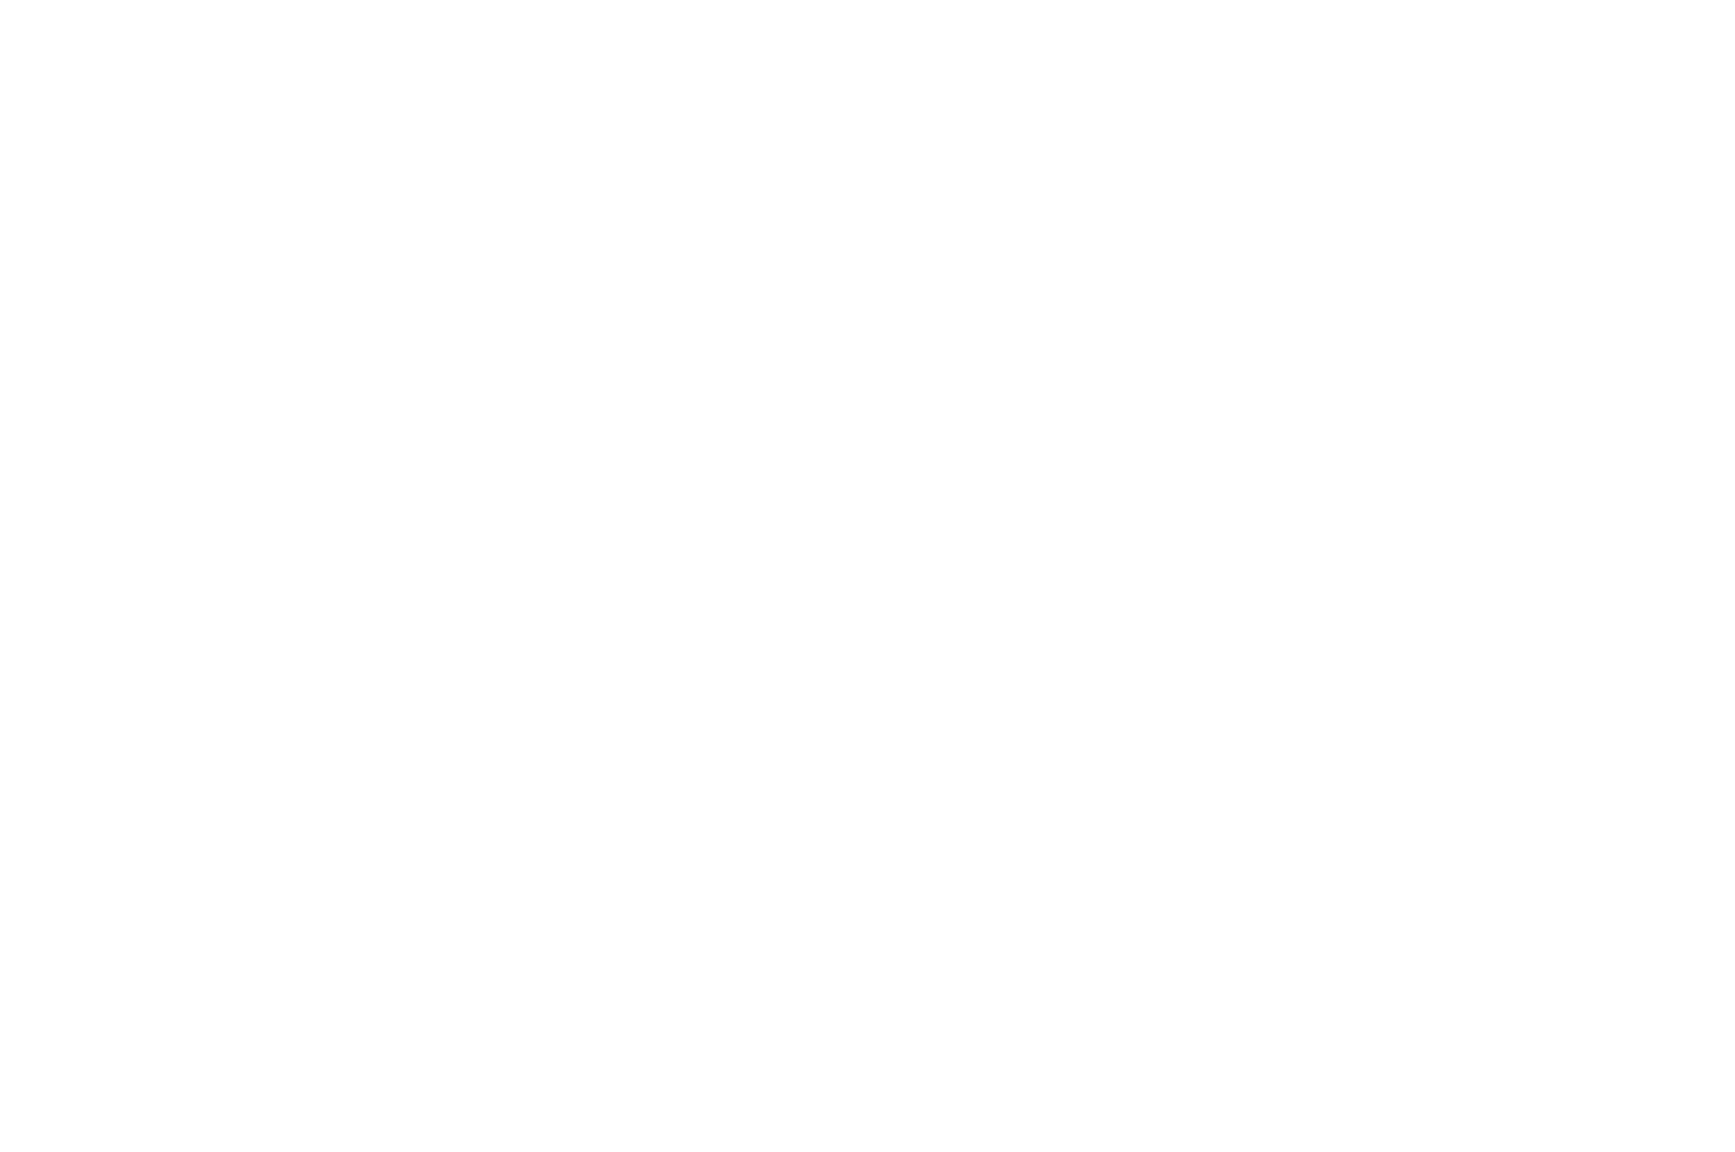 OFFICIAL SELECTION - Independent Days International Filmfestival - 2021